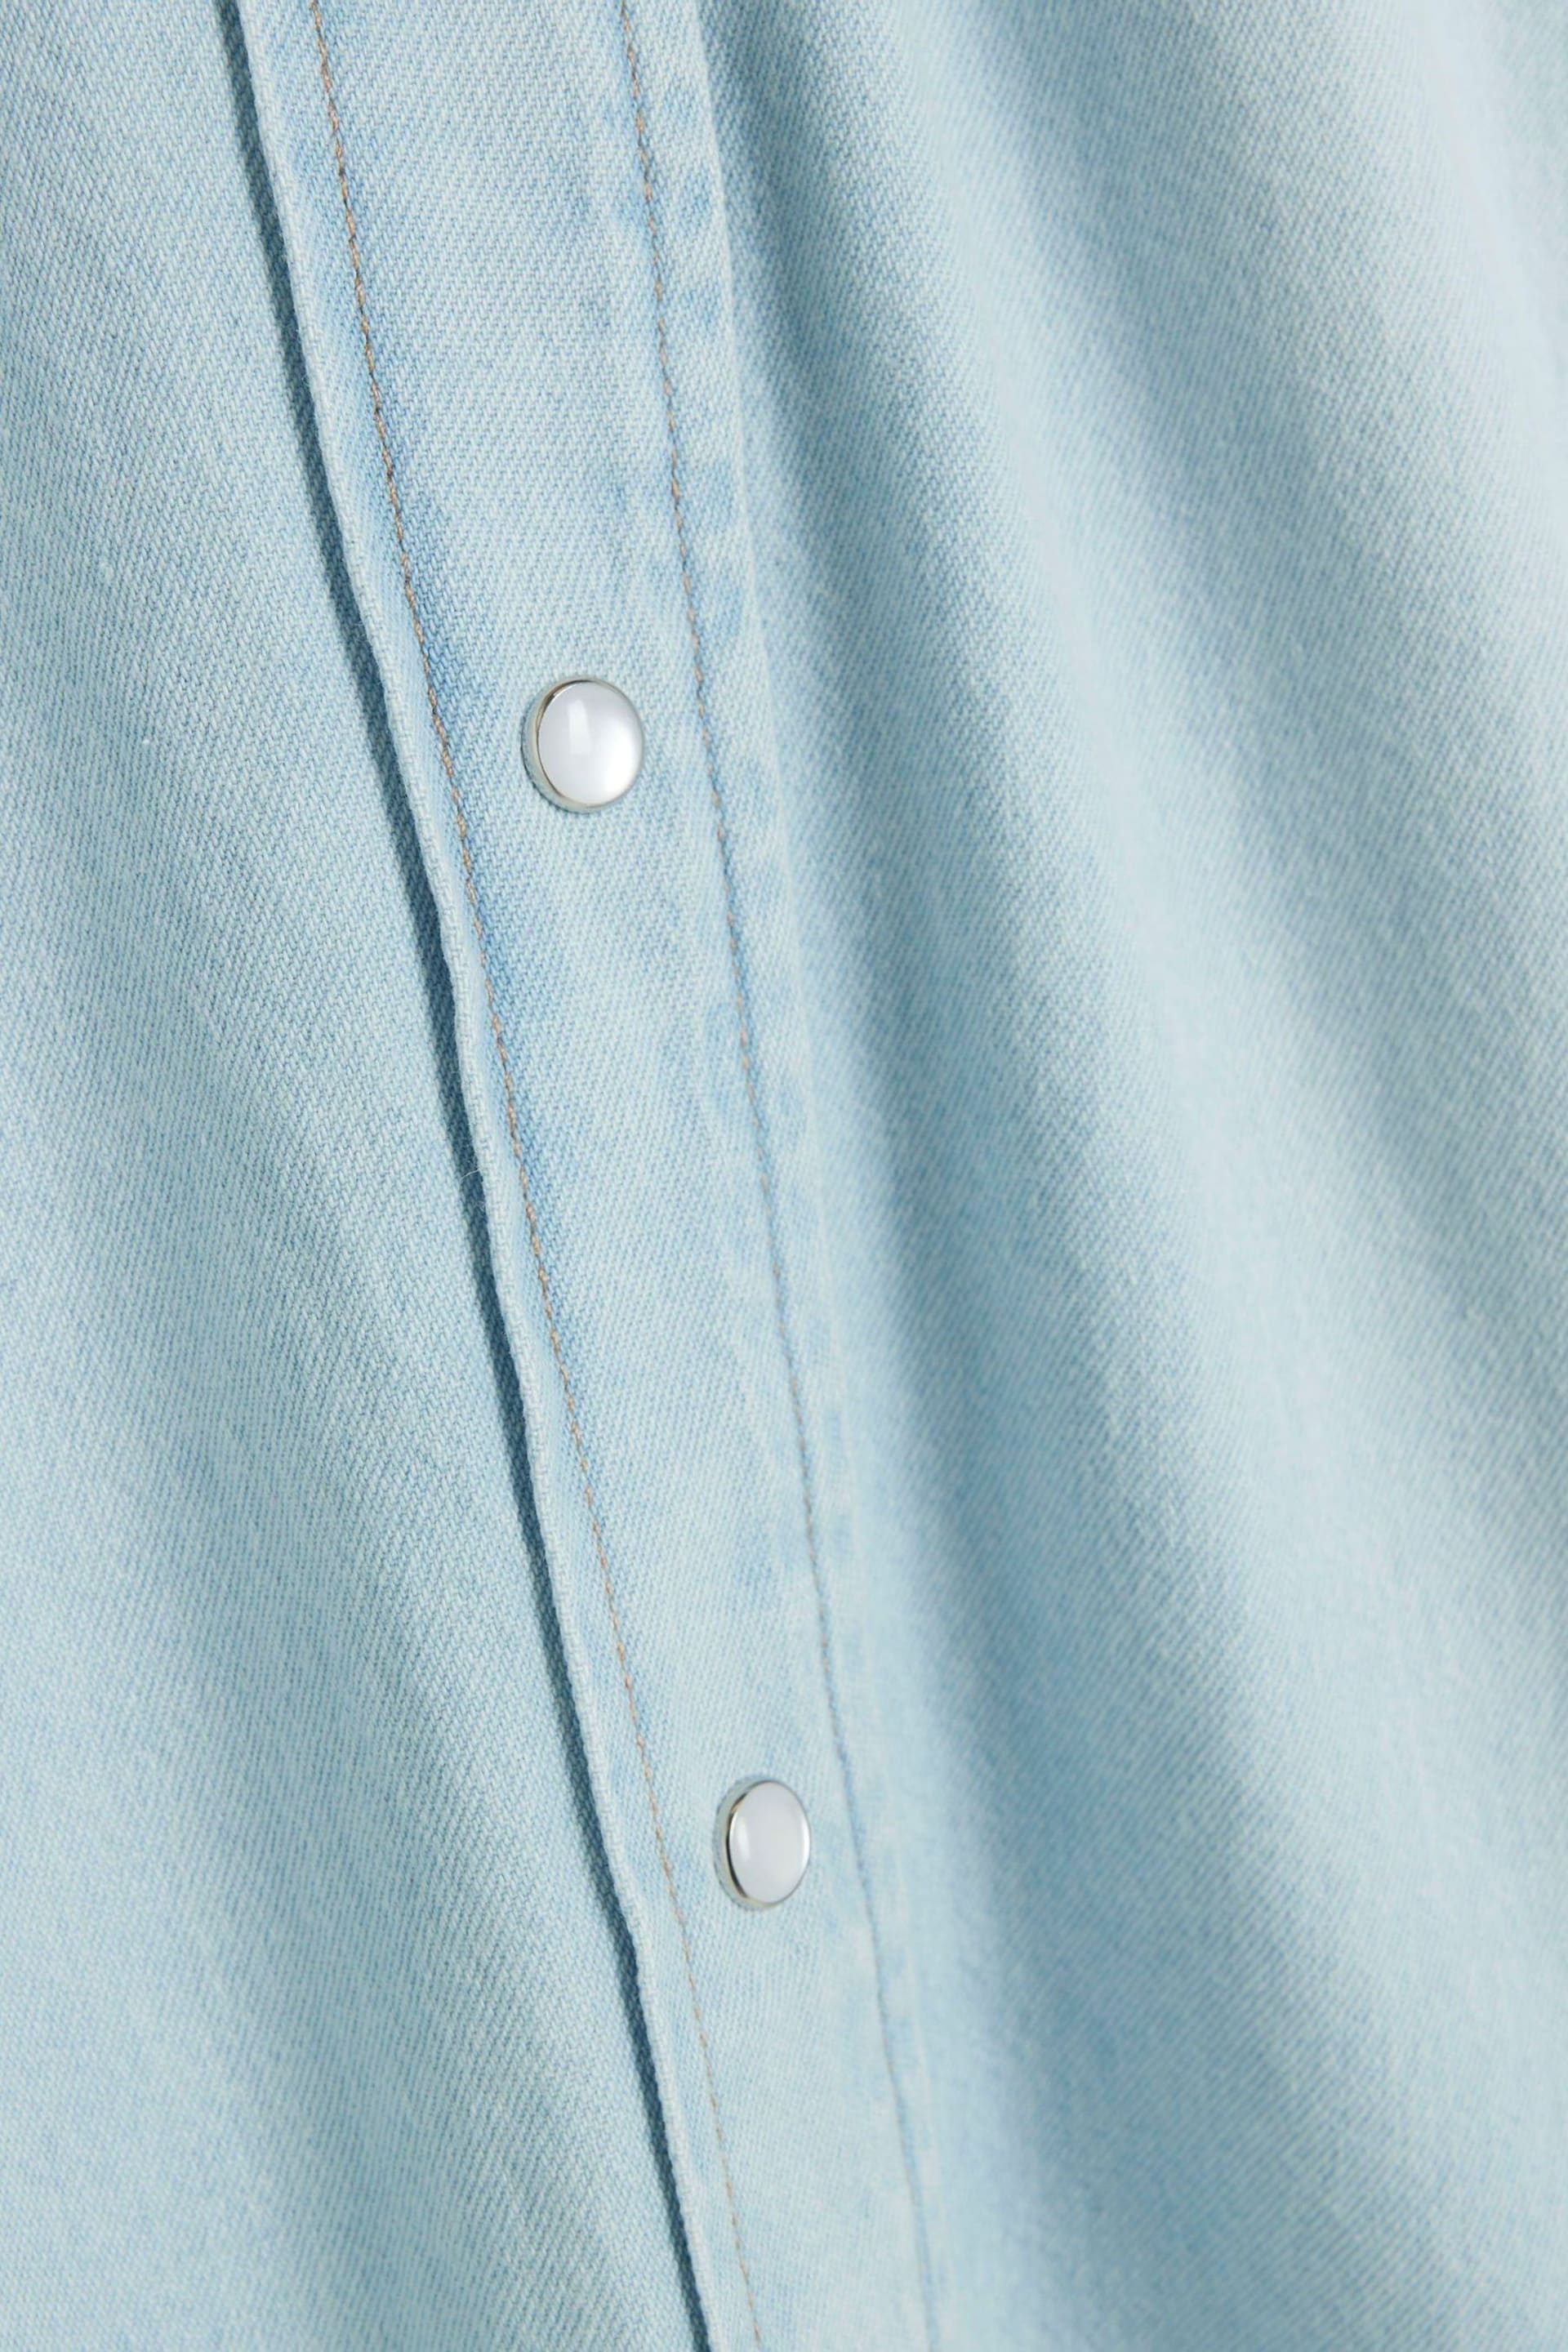 River Island Blue Denim Oversized Shirt Dress - Image 5 of 5